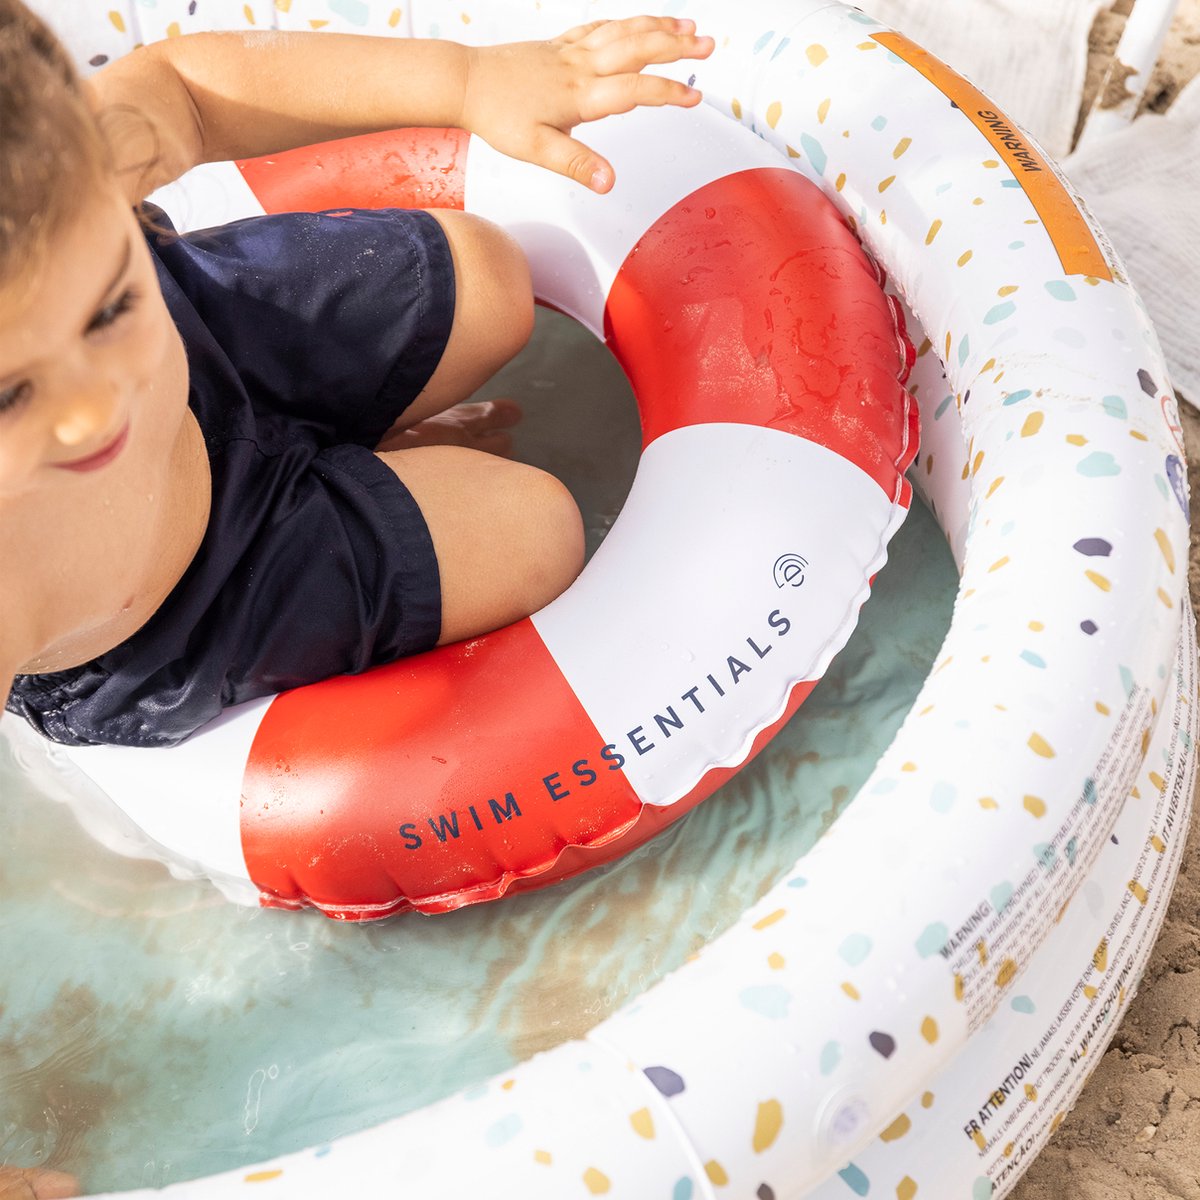 Swim Essentials Piscine enfant ronde ballon bouée 120 cm